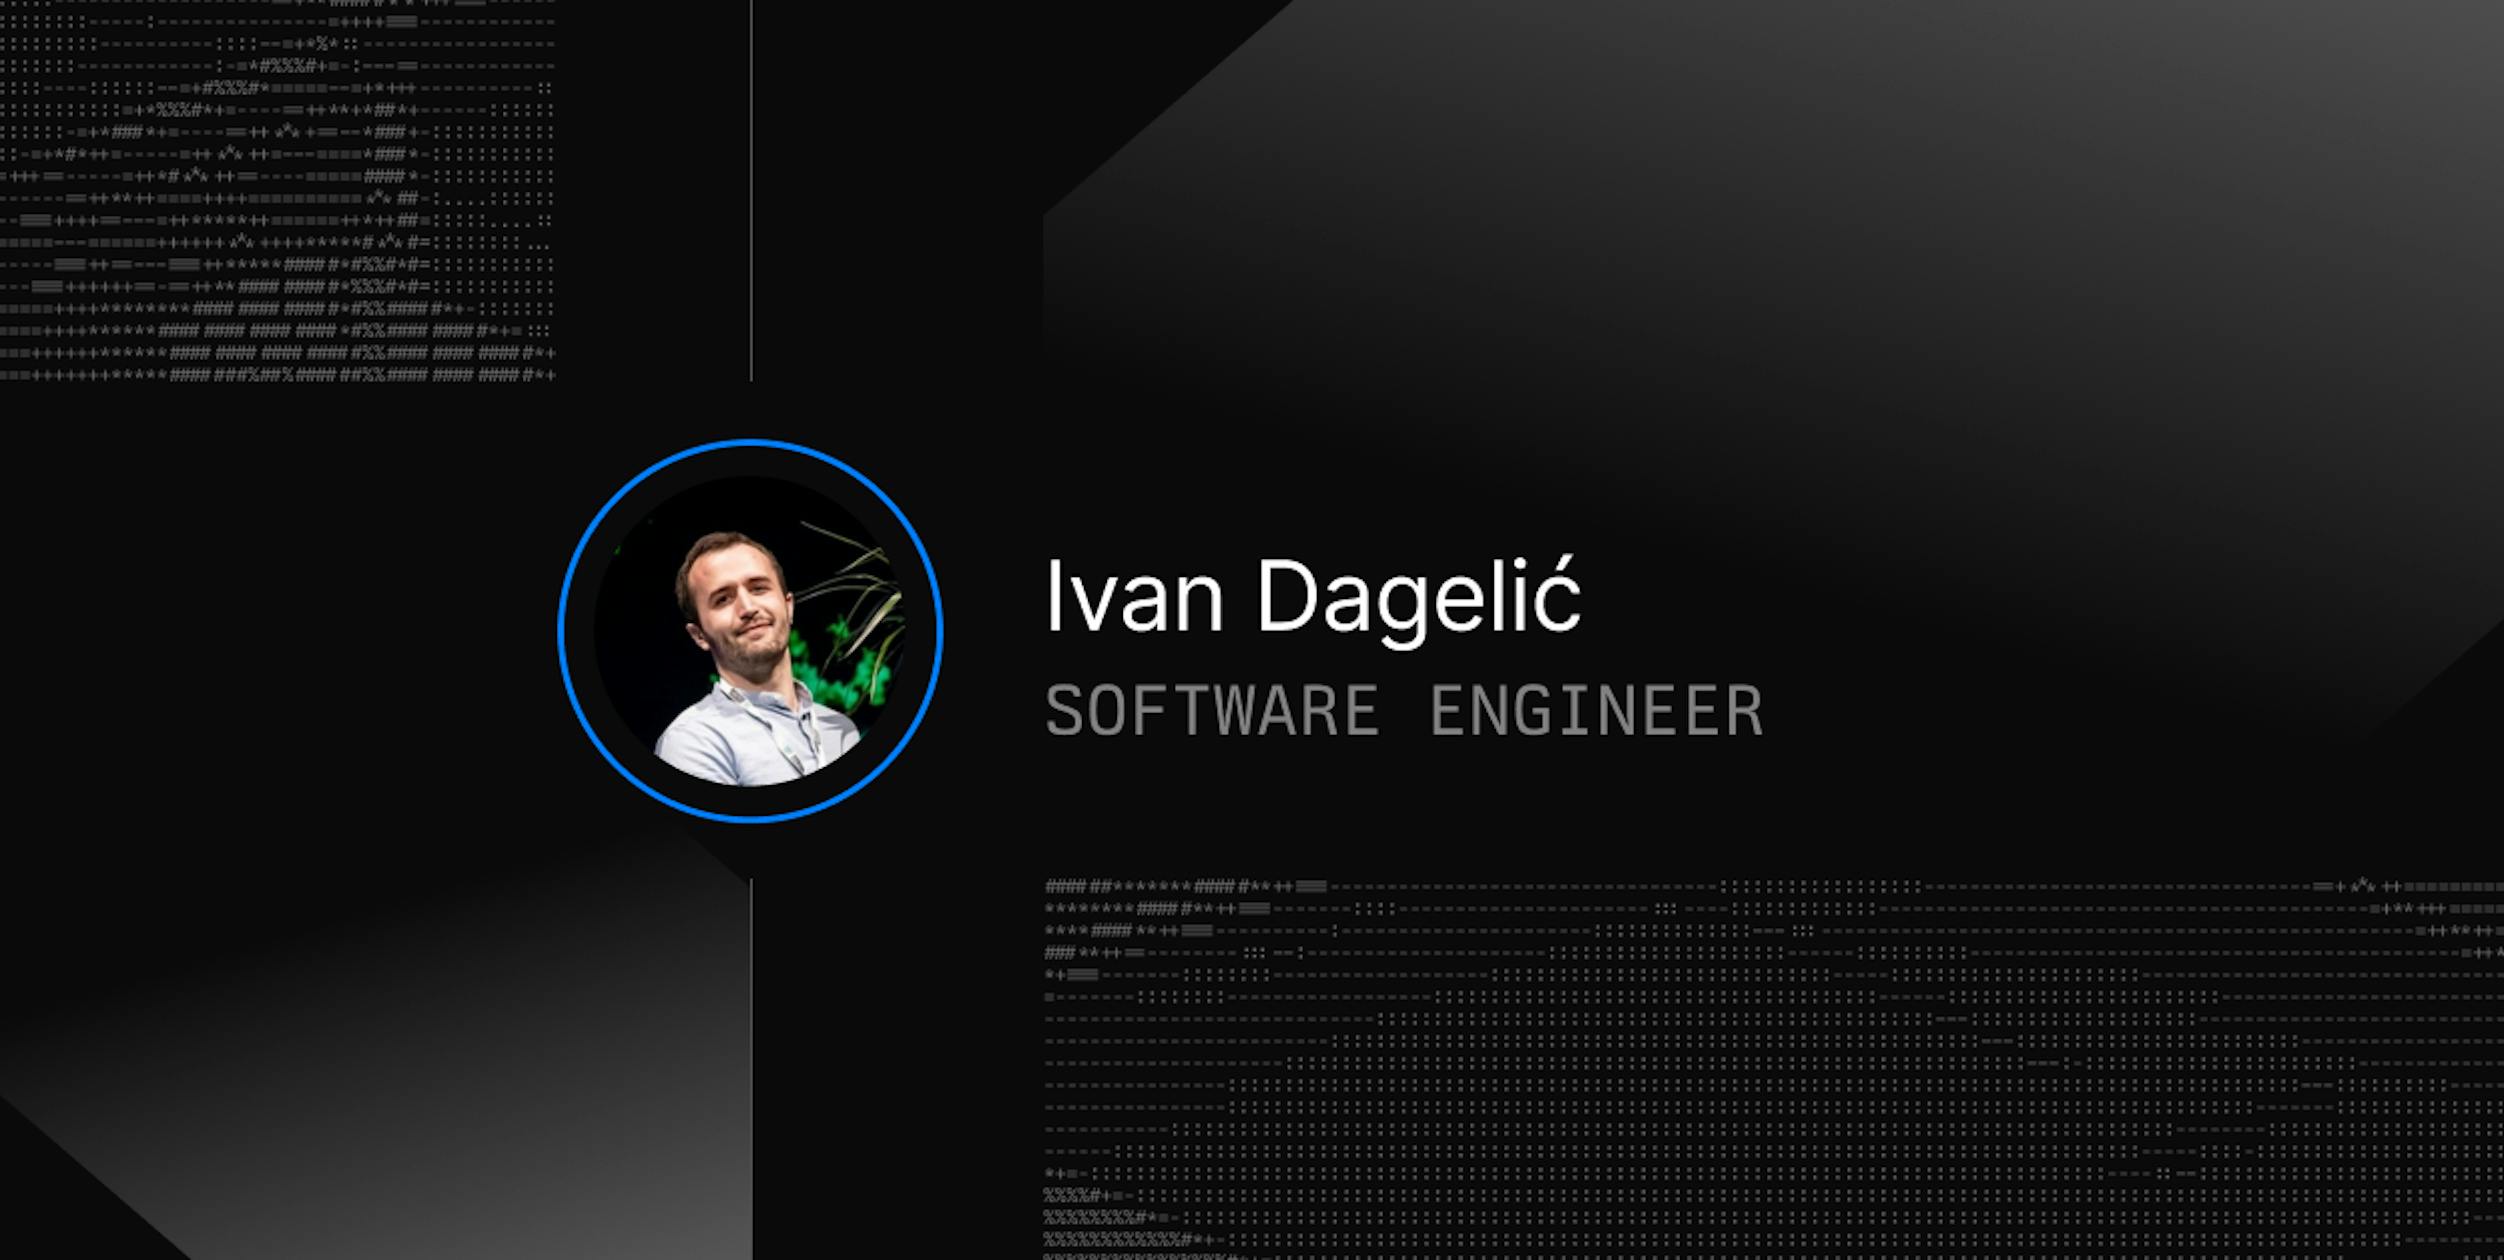 Ivan Dagelic, Software Engineer at Daytona